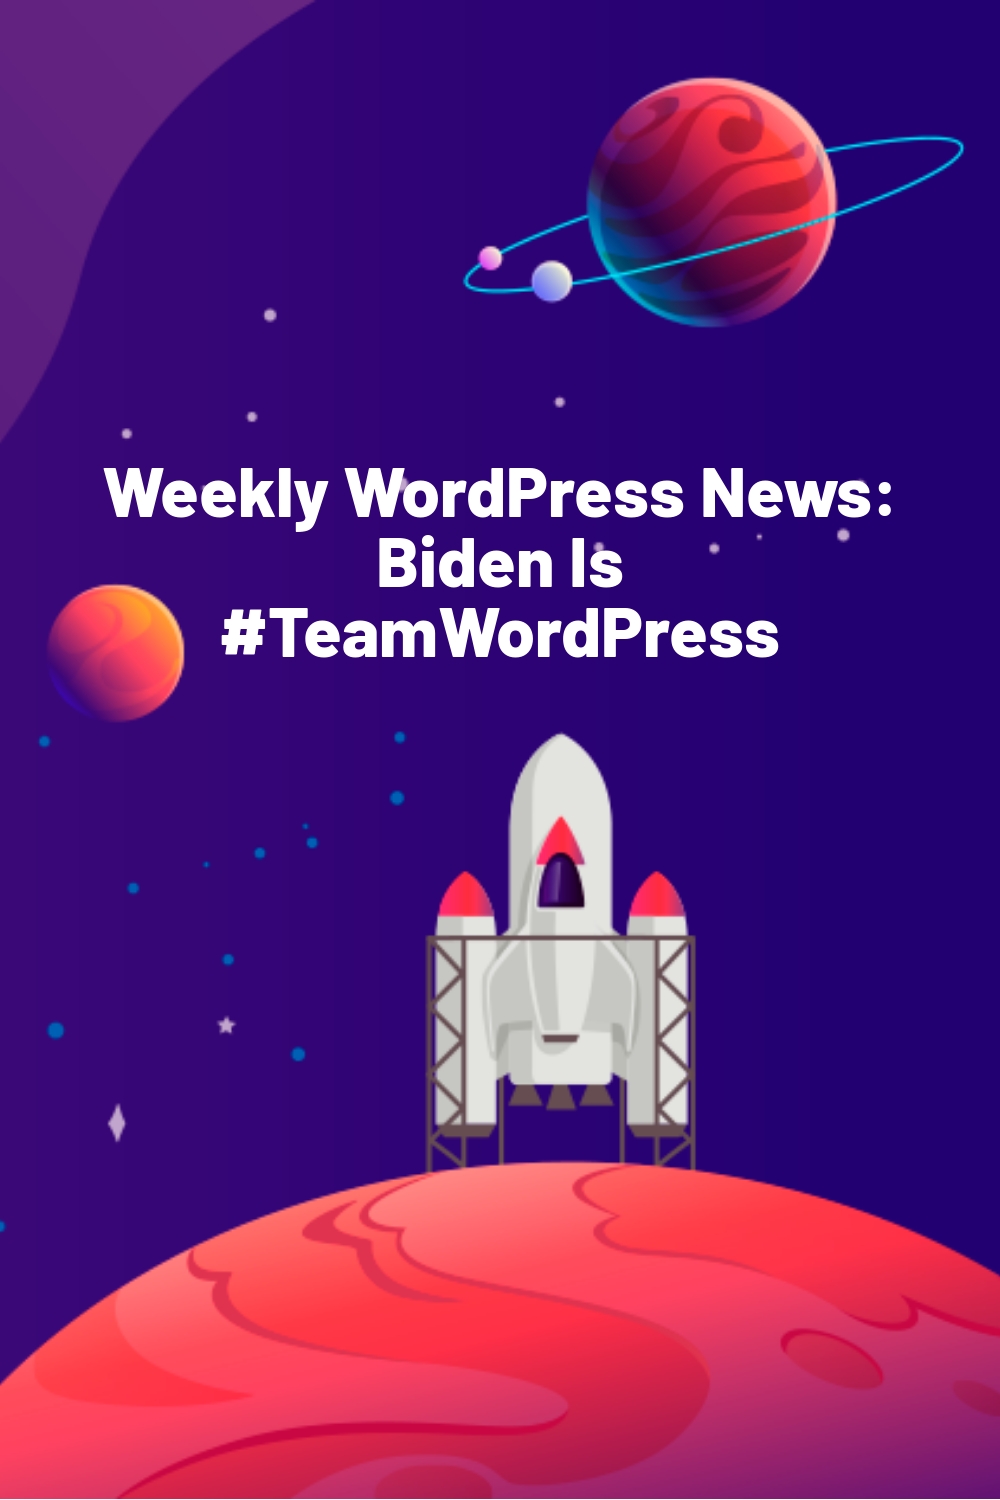 Weekly WordPress News: Biden Is #TeamWordPress